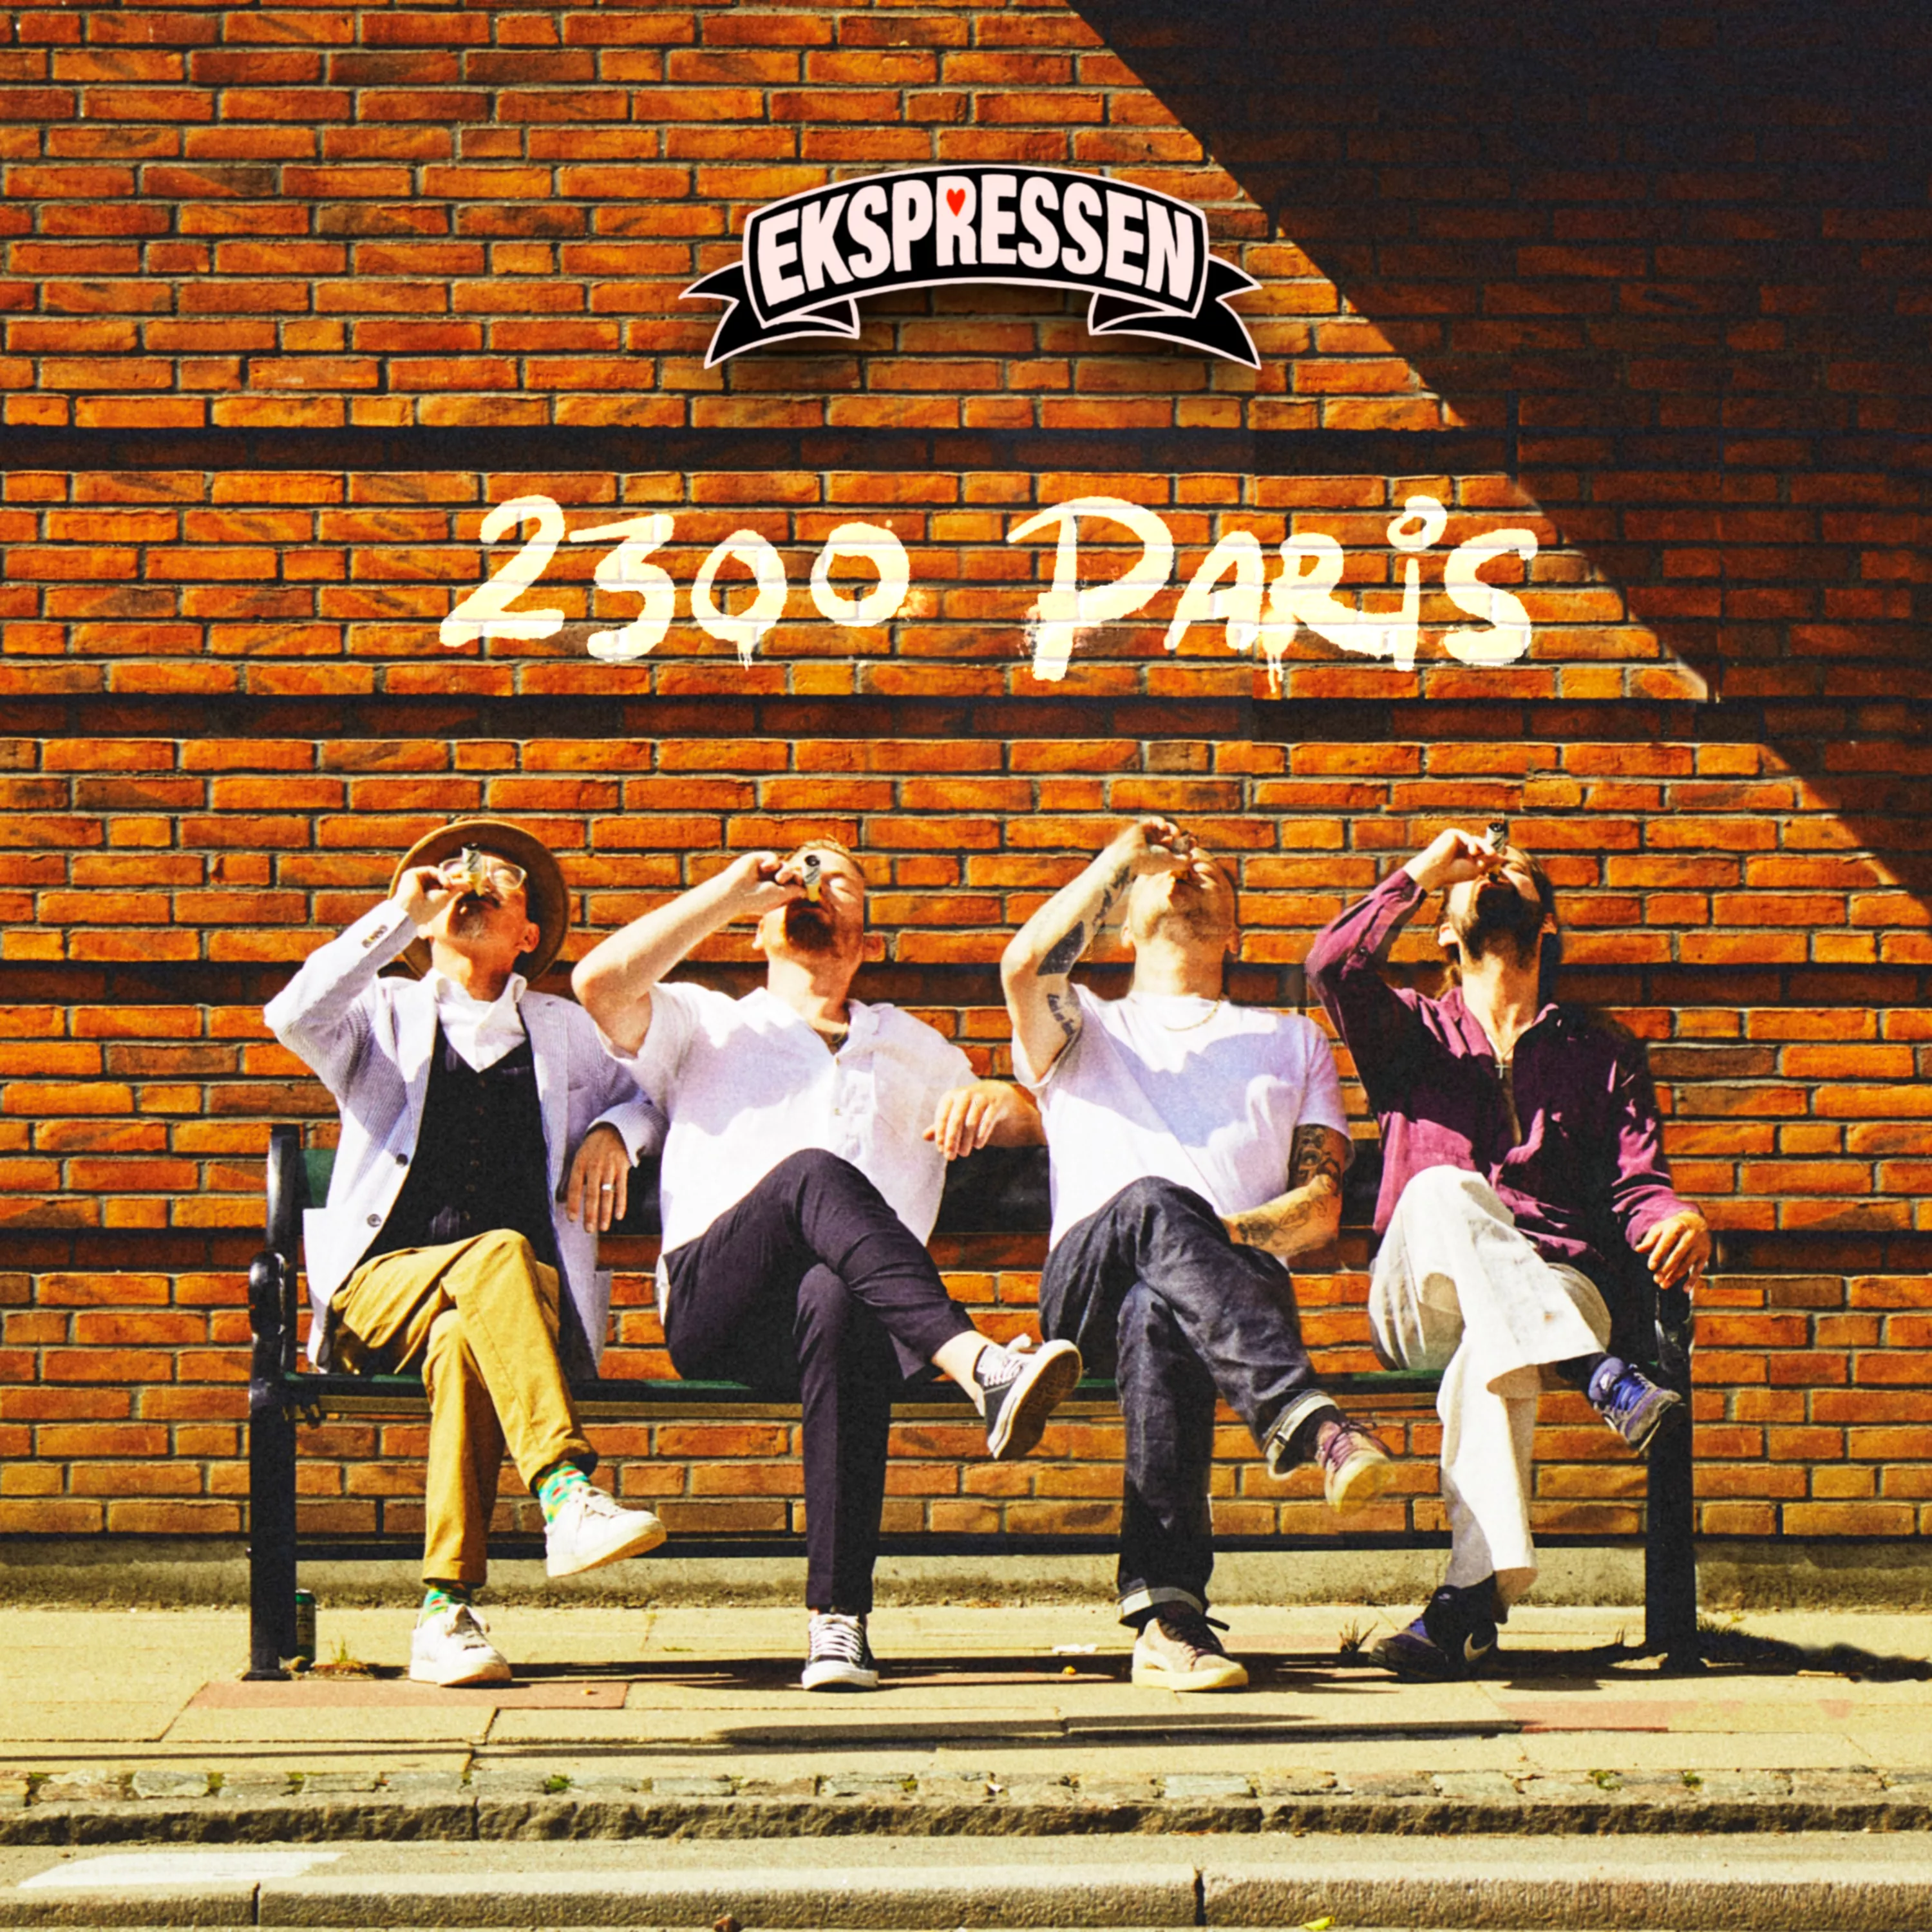 2300 Paris - Ekspressen